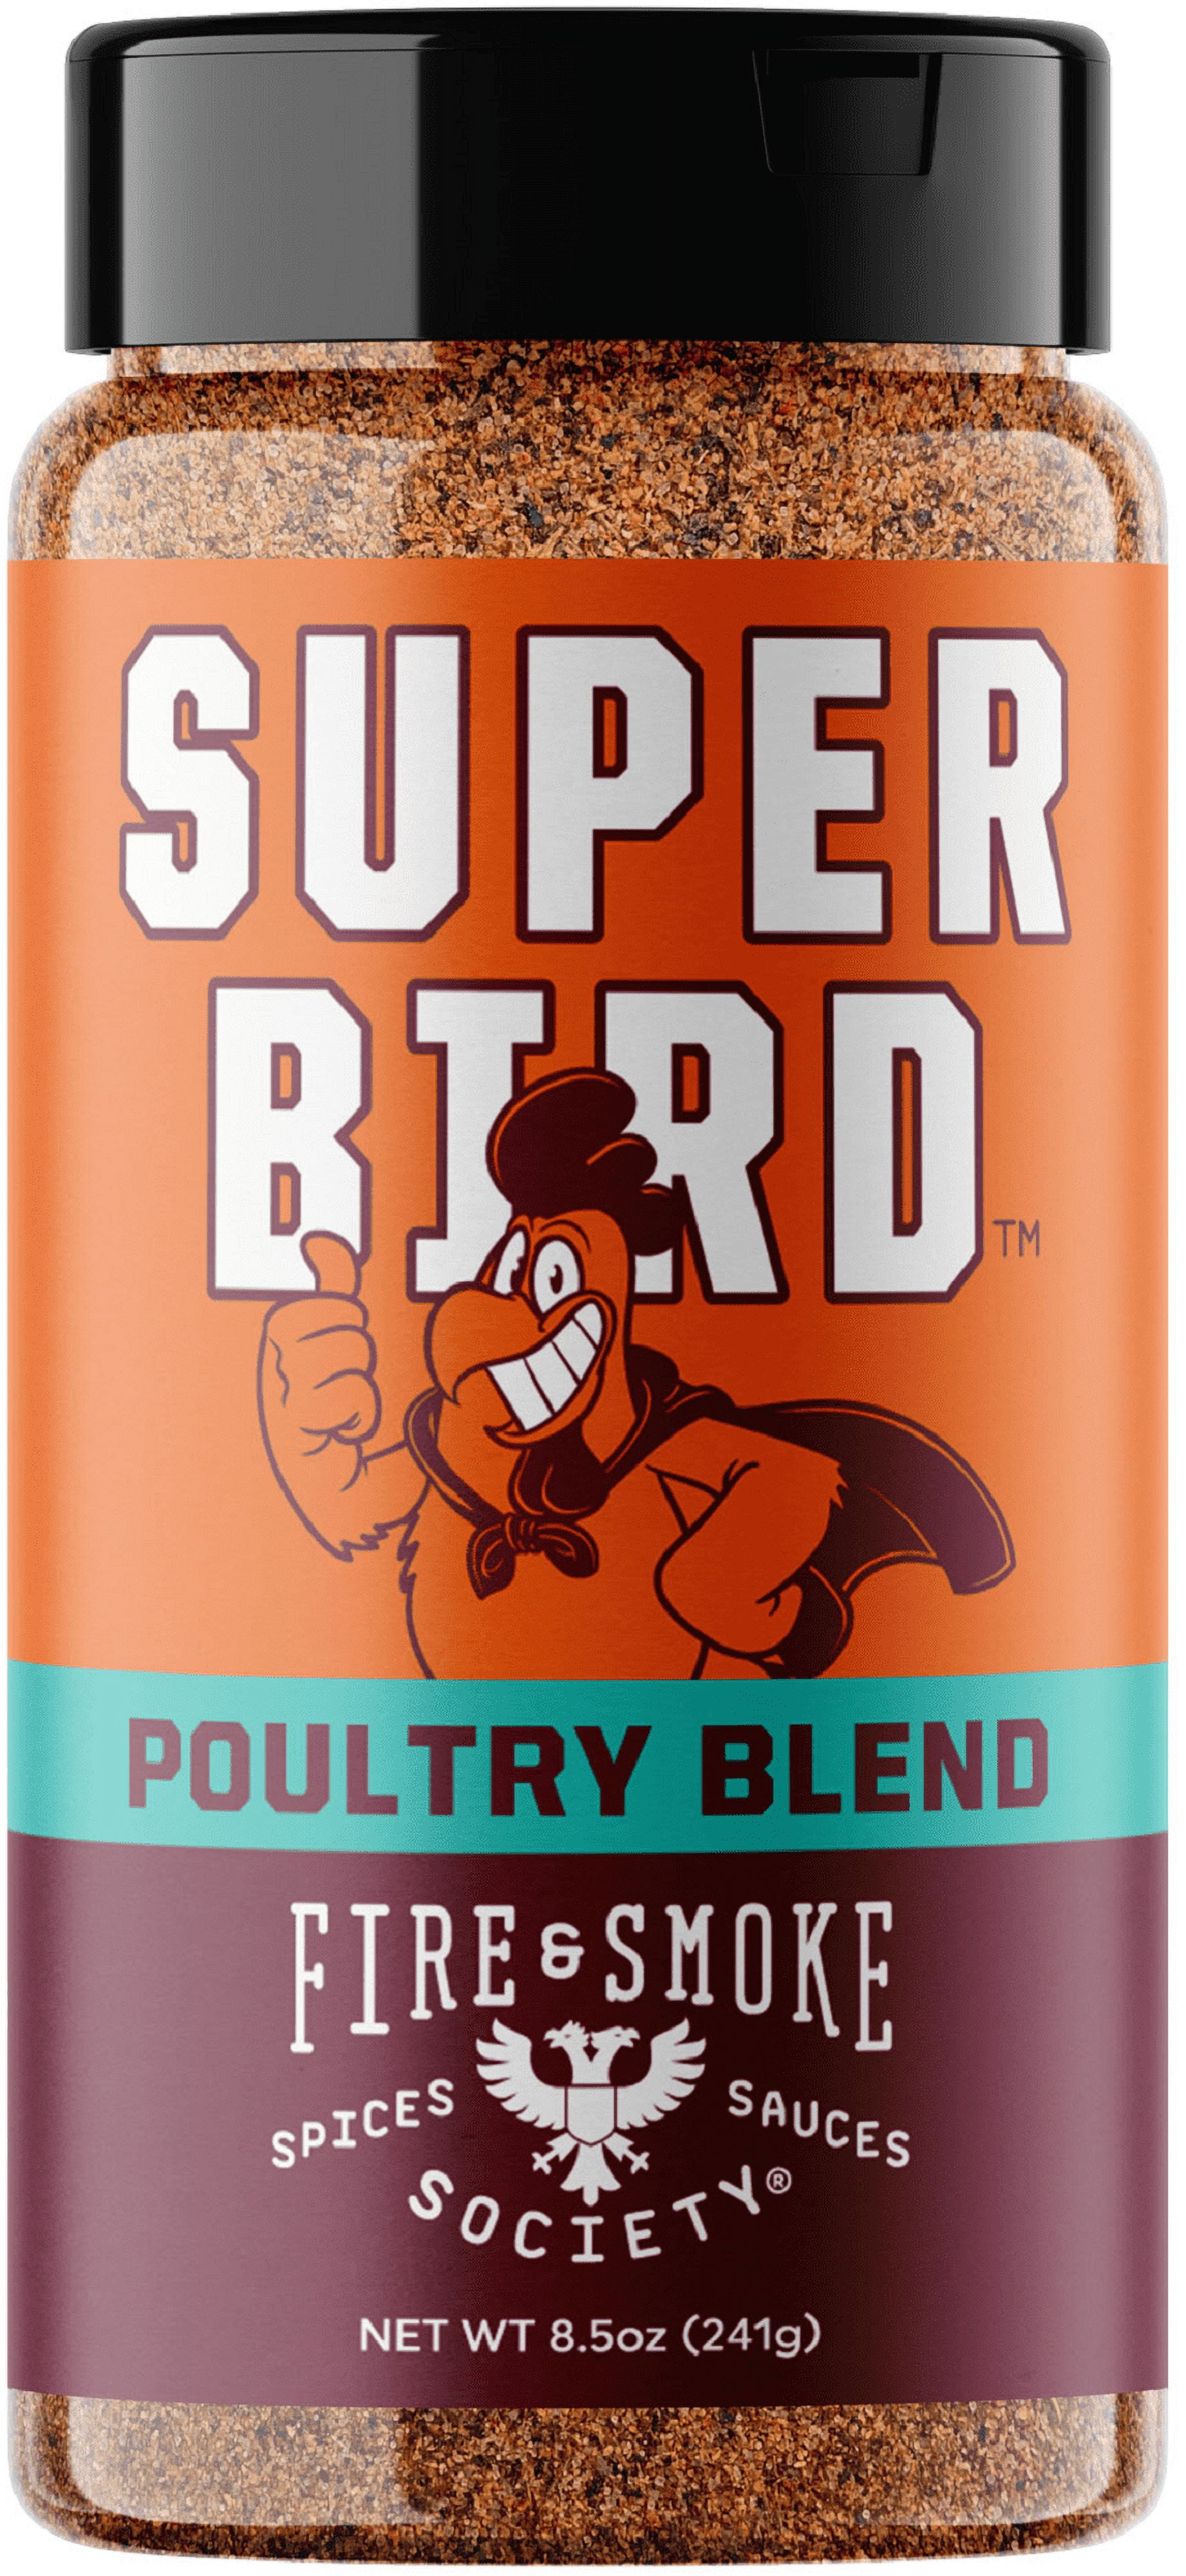 AllOutdoor Review: Fire & Smoke Society - Super Bird Seasoning